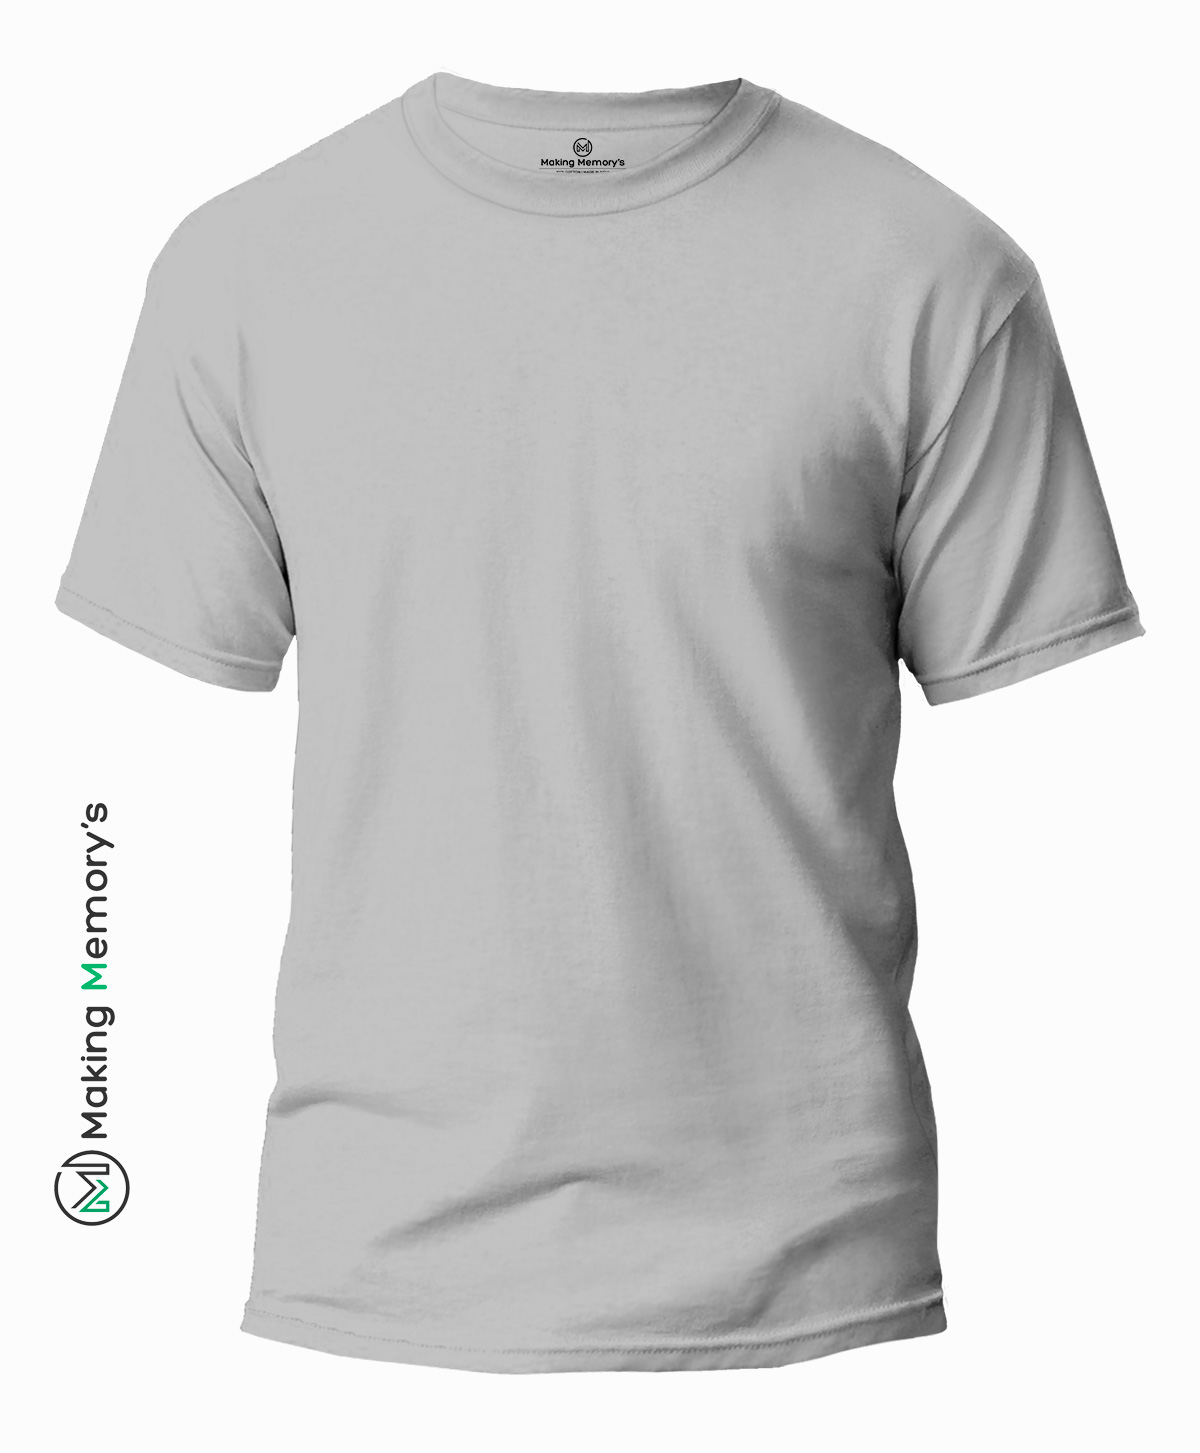 Plain T-Shirts - Buy T-Shirts for Men Online - Making Memory's